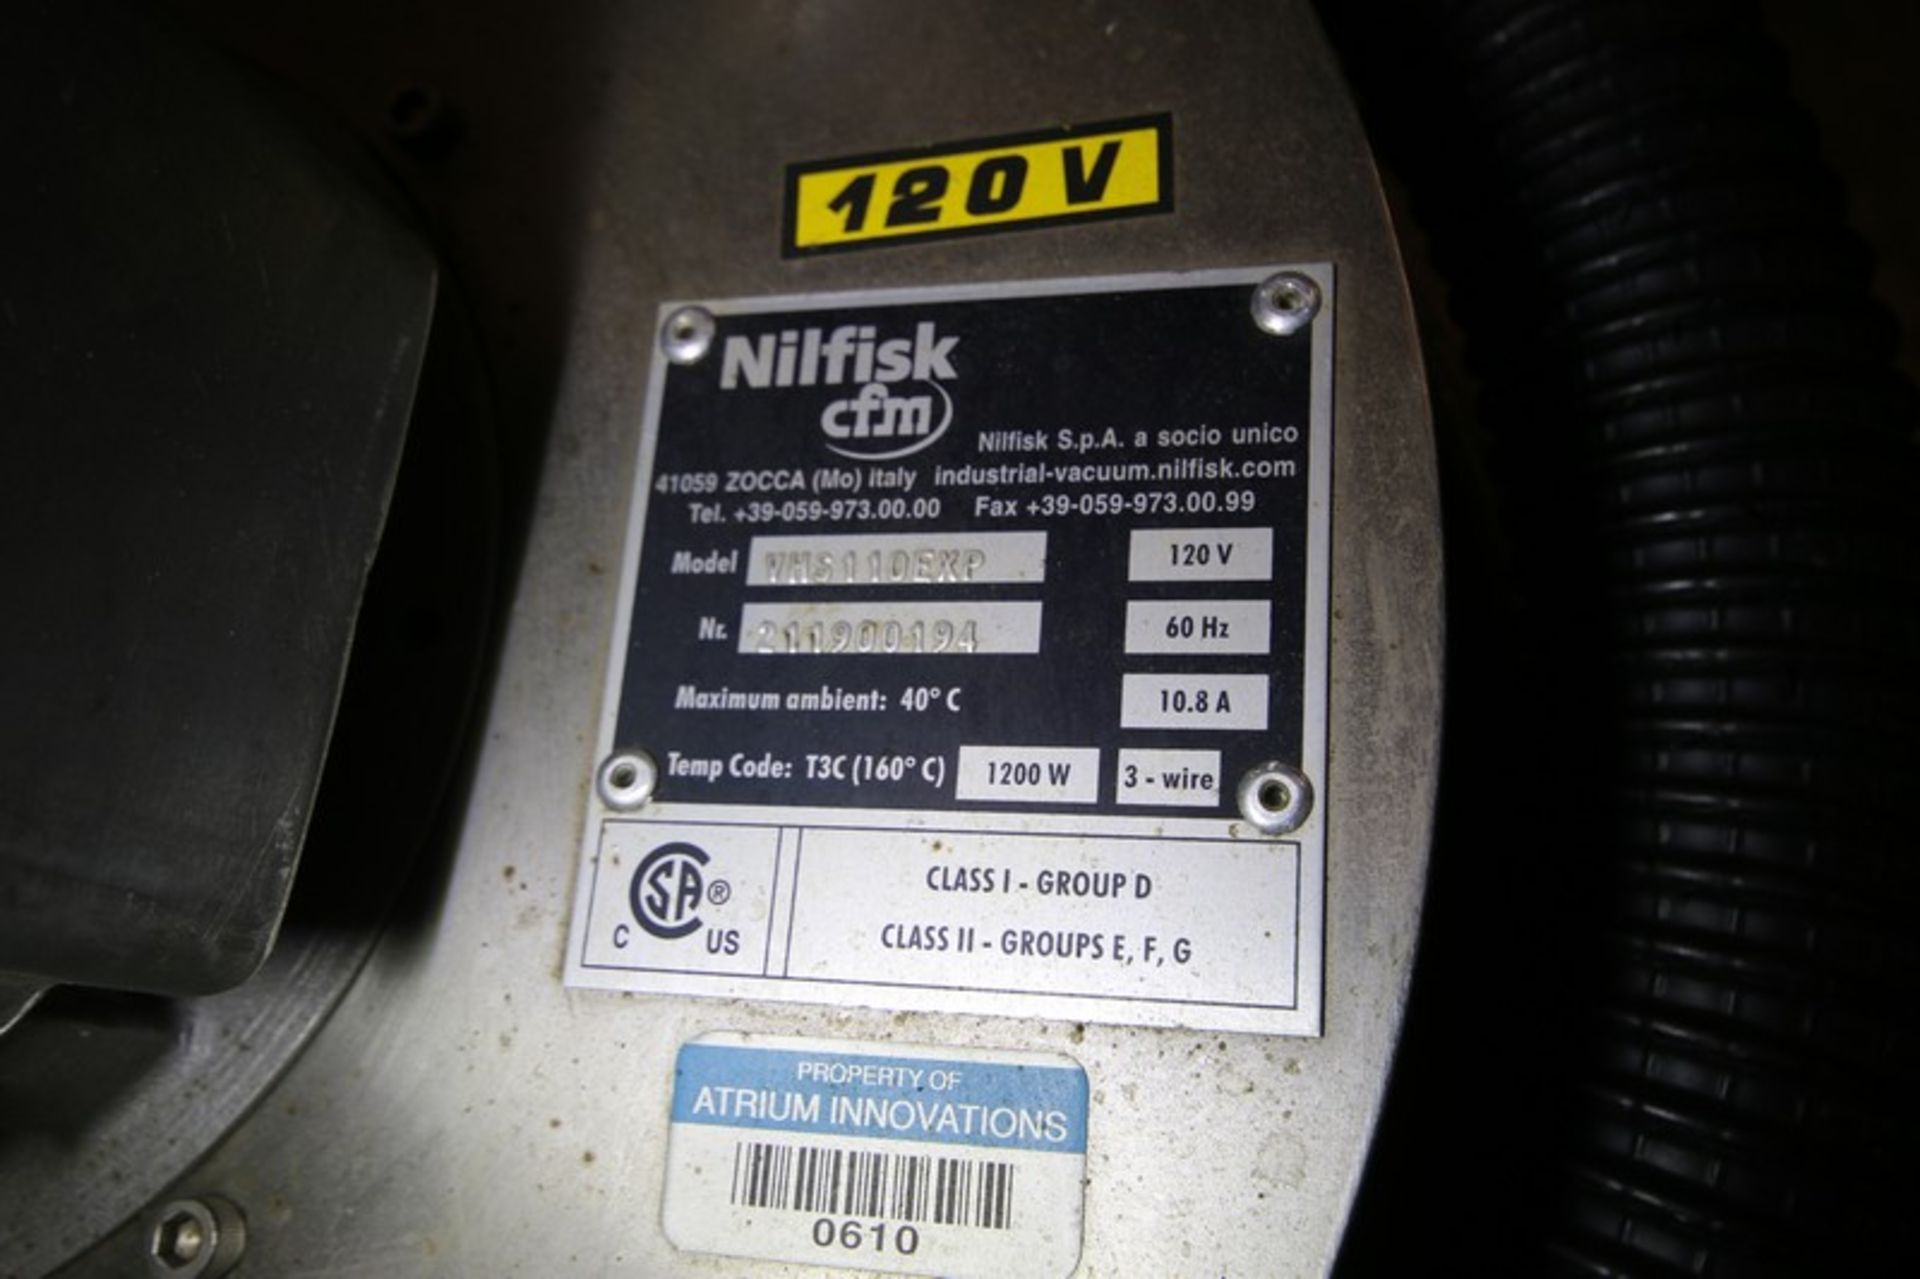 Nilfisk / CFM Industrial Vacuum, Model VHS110EXP, SN 211900194, 110V (INV#101546) (Located @ the MDG - Image 4 of 4